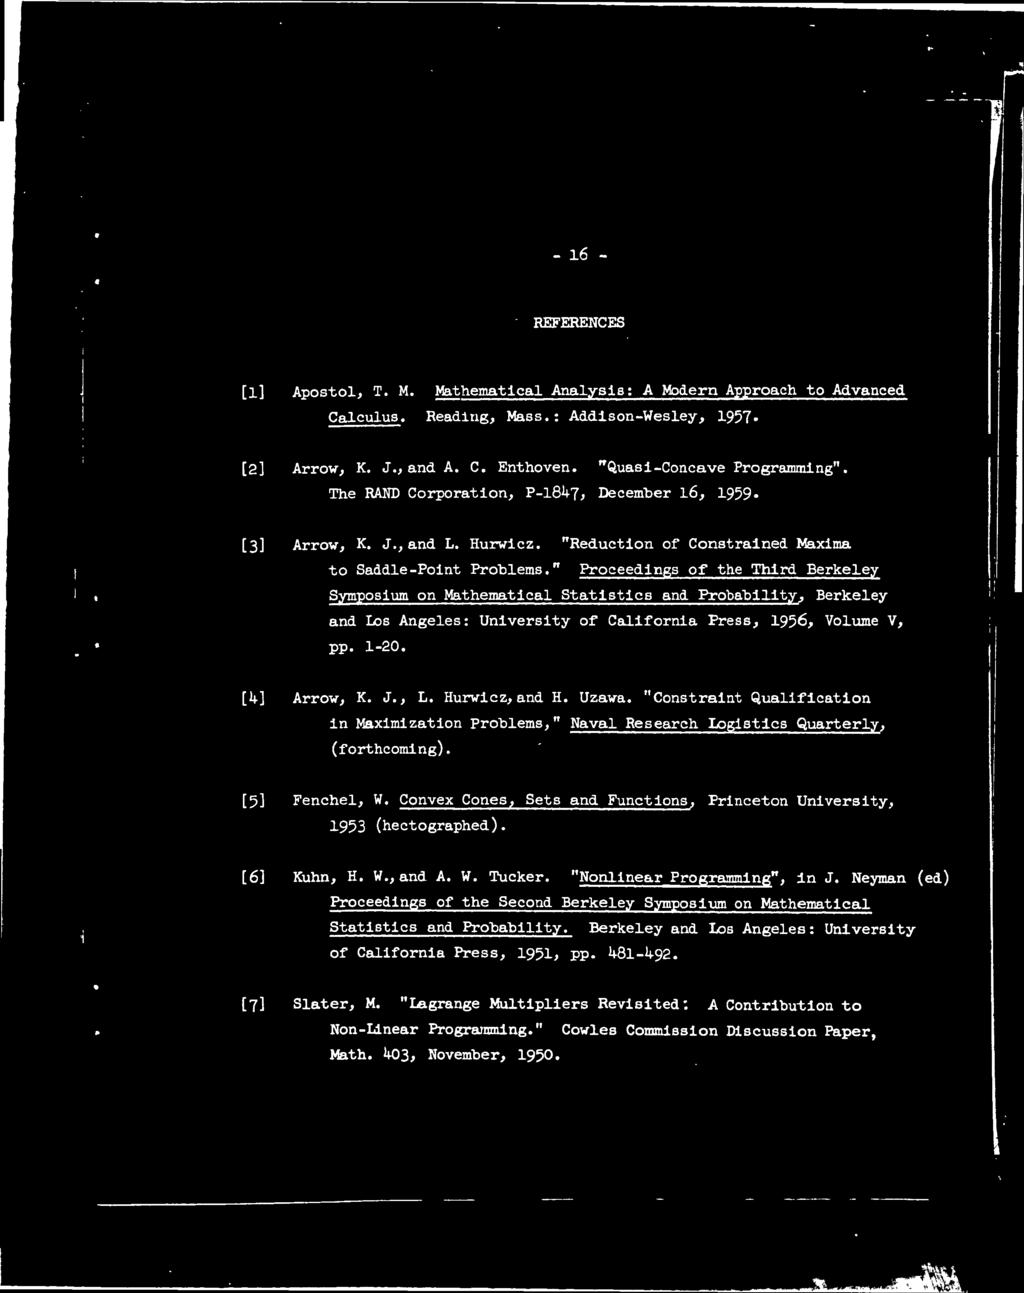 " Proceedings of the Third Berkeley Symposium on Mathematical Statistics and Probability, Berkeley and Los Angeles: University of California Press, 1956, Volume V, pp. 1-20. [h] Arrow, K. J., L.